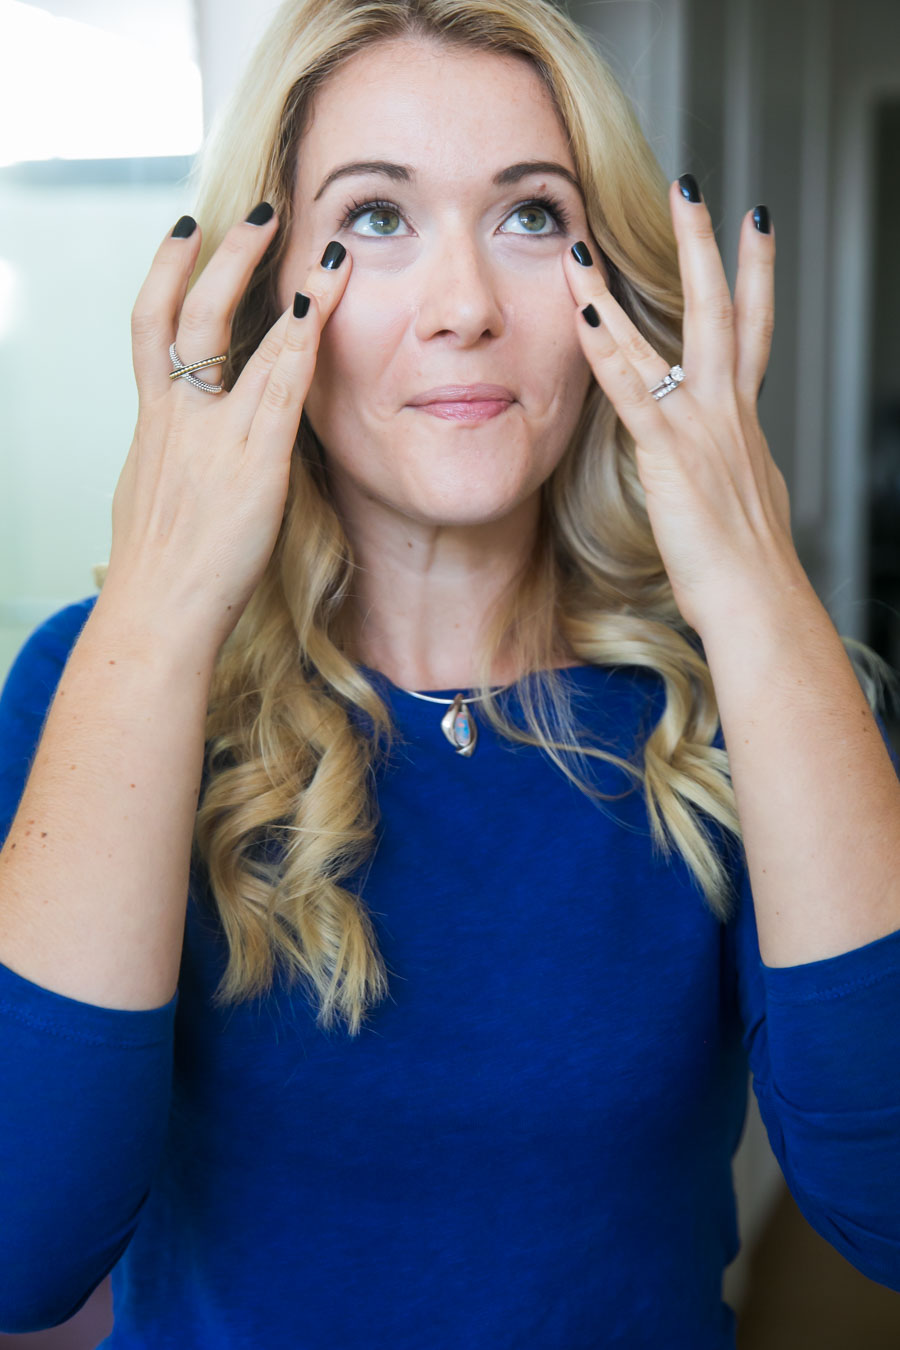 How to Brighten Under Eyes - Step by Step Eye Makeup Tutorial